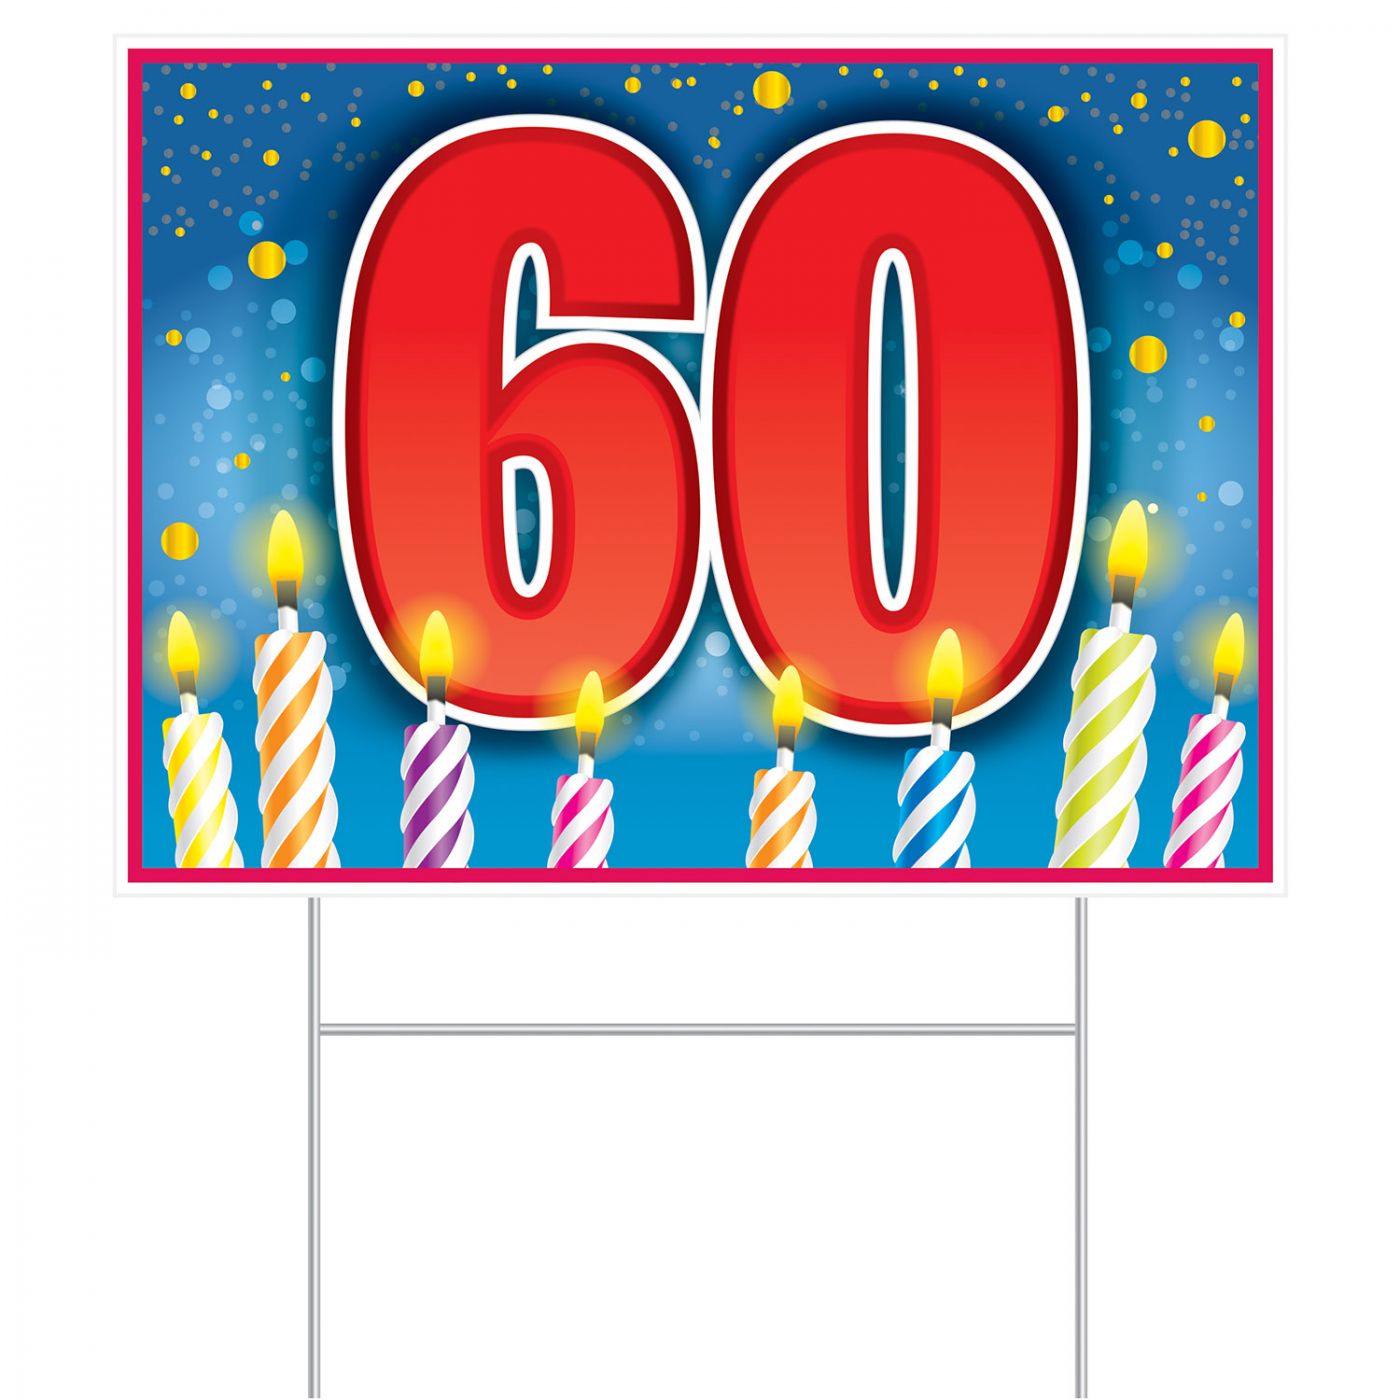 PLASTIC  60  BIRTHDAY YARD SIGN (6) image